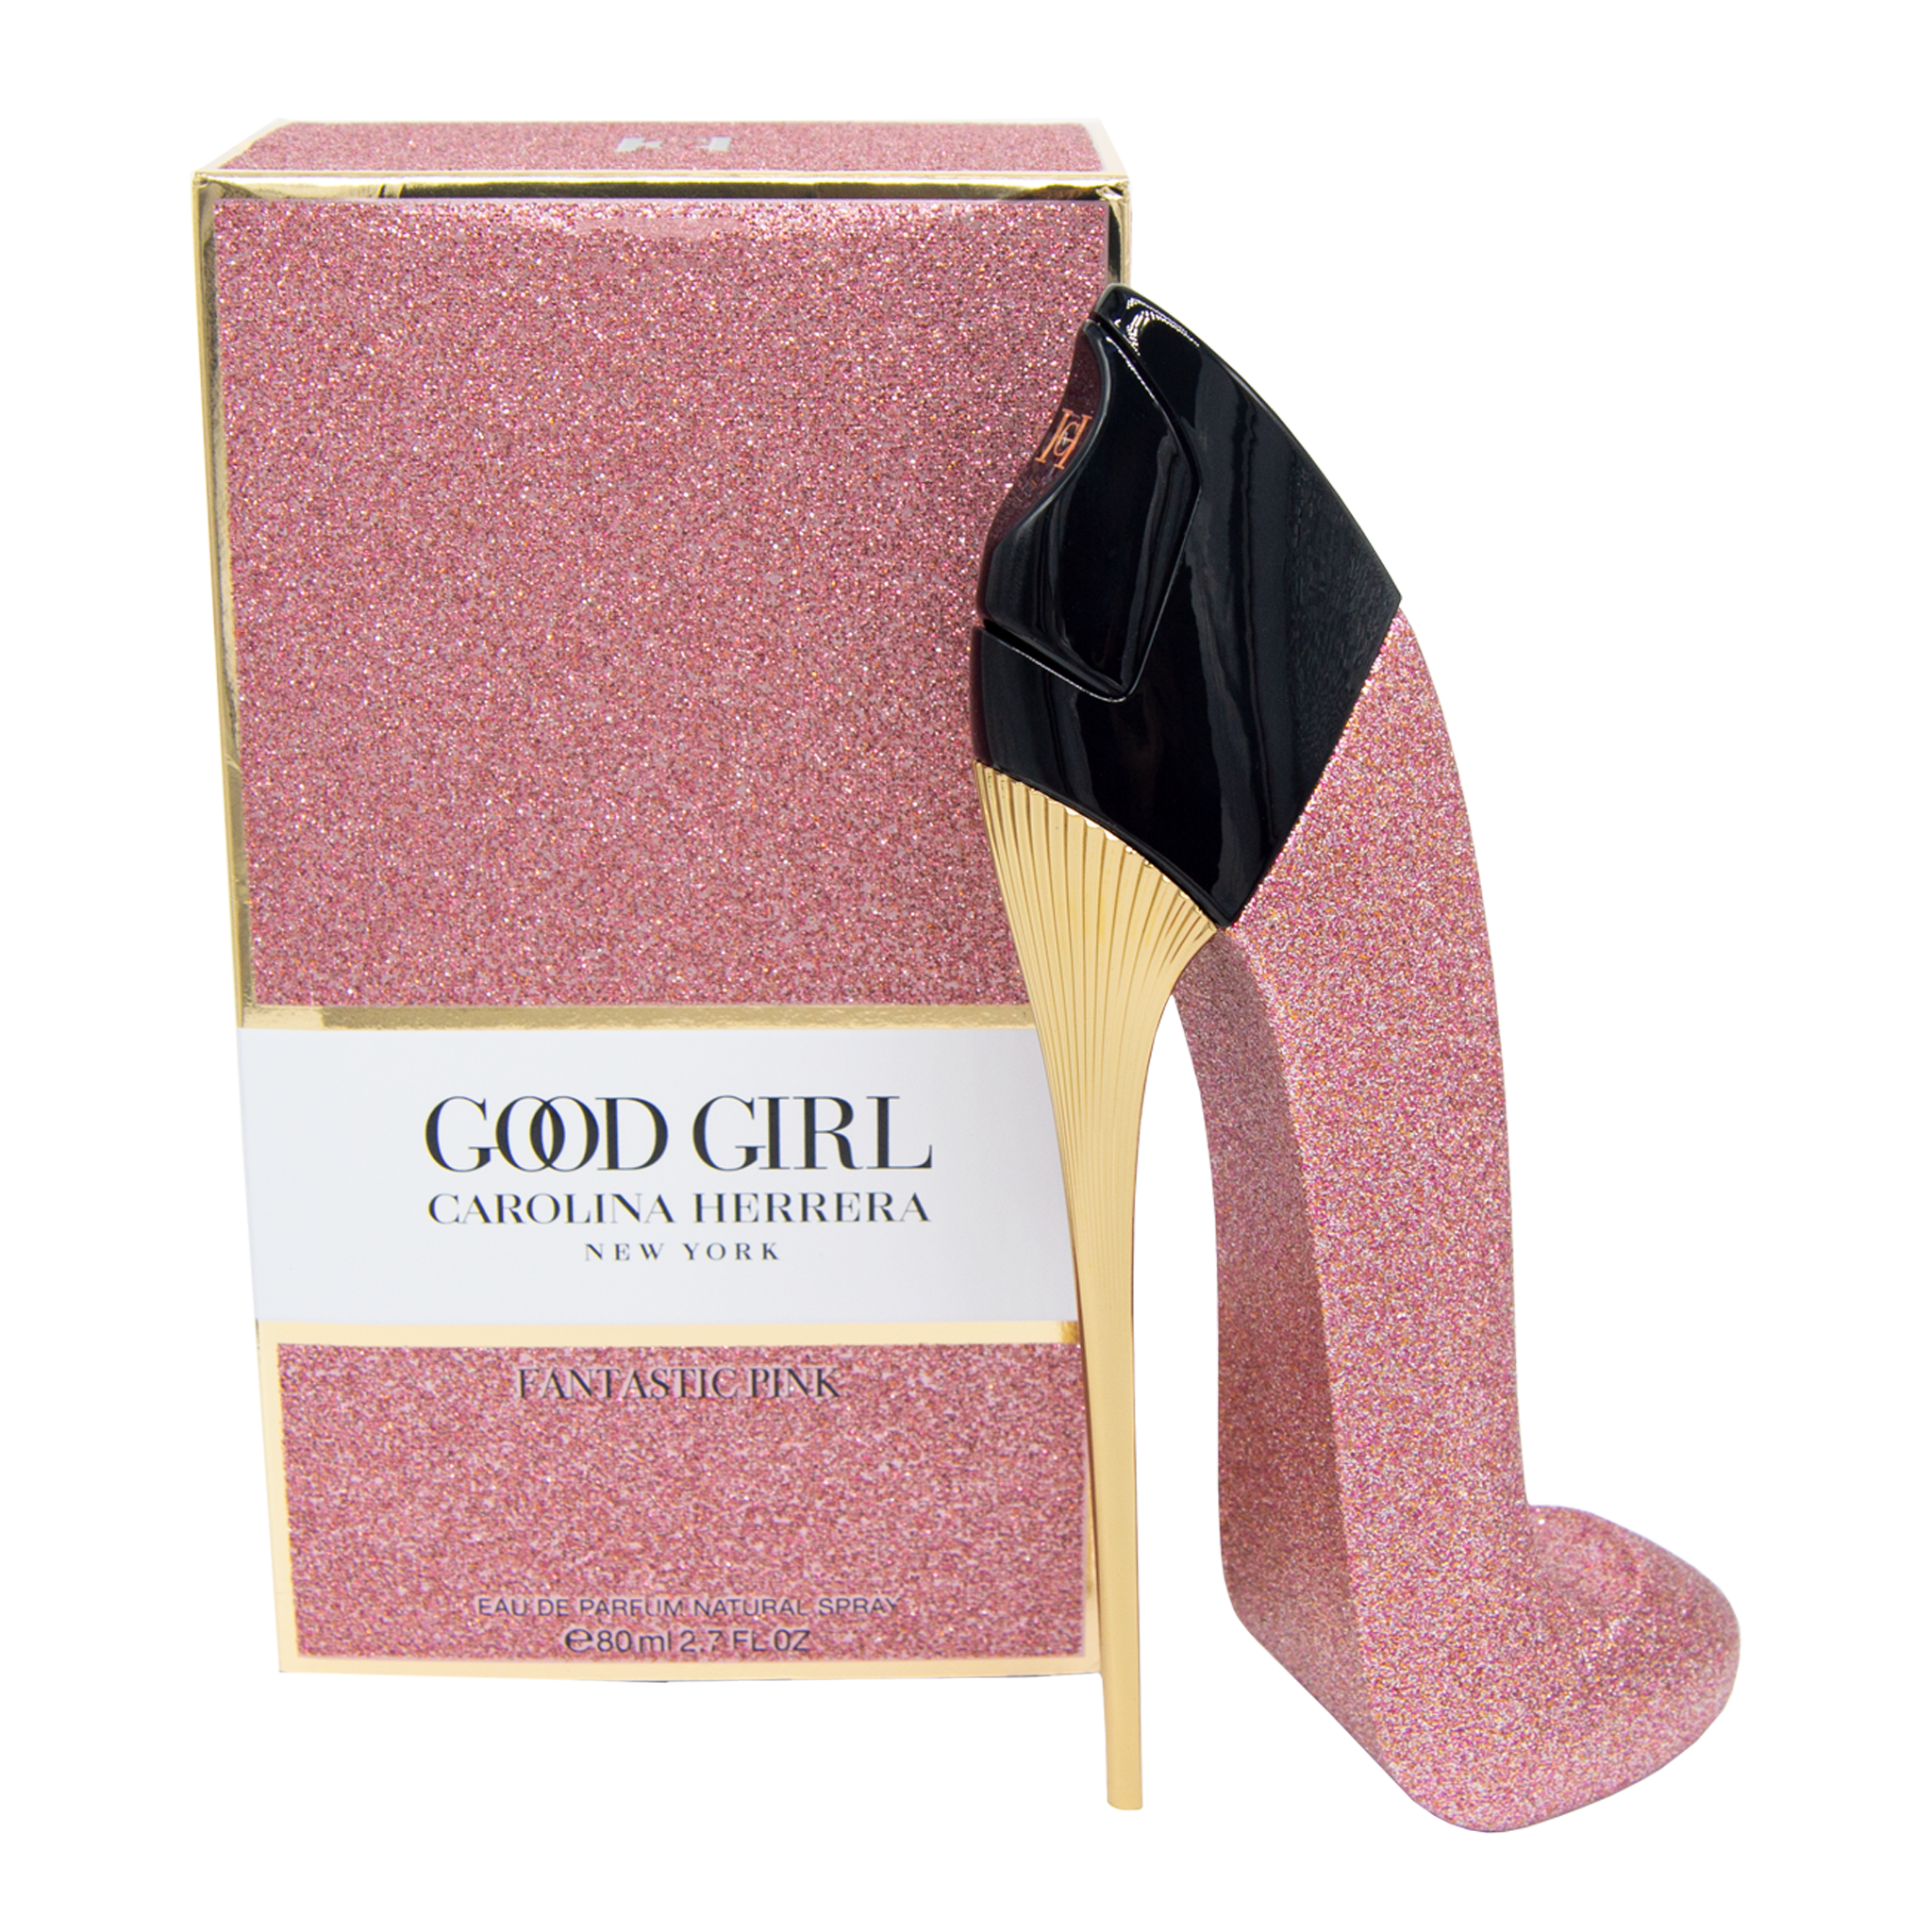 Good Girl Fantastic Pink Carolina Herrera perfume - a fragrance